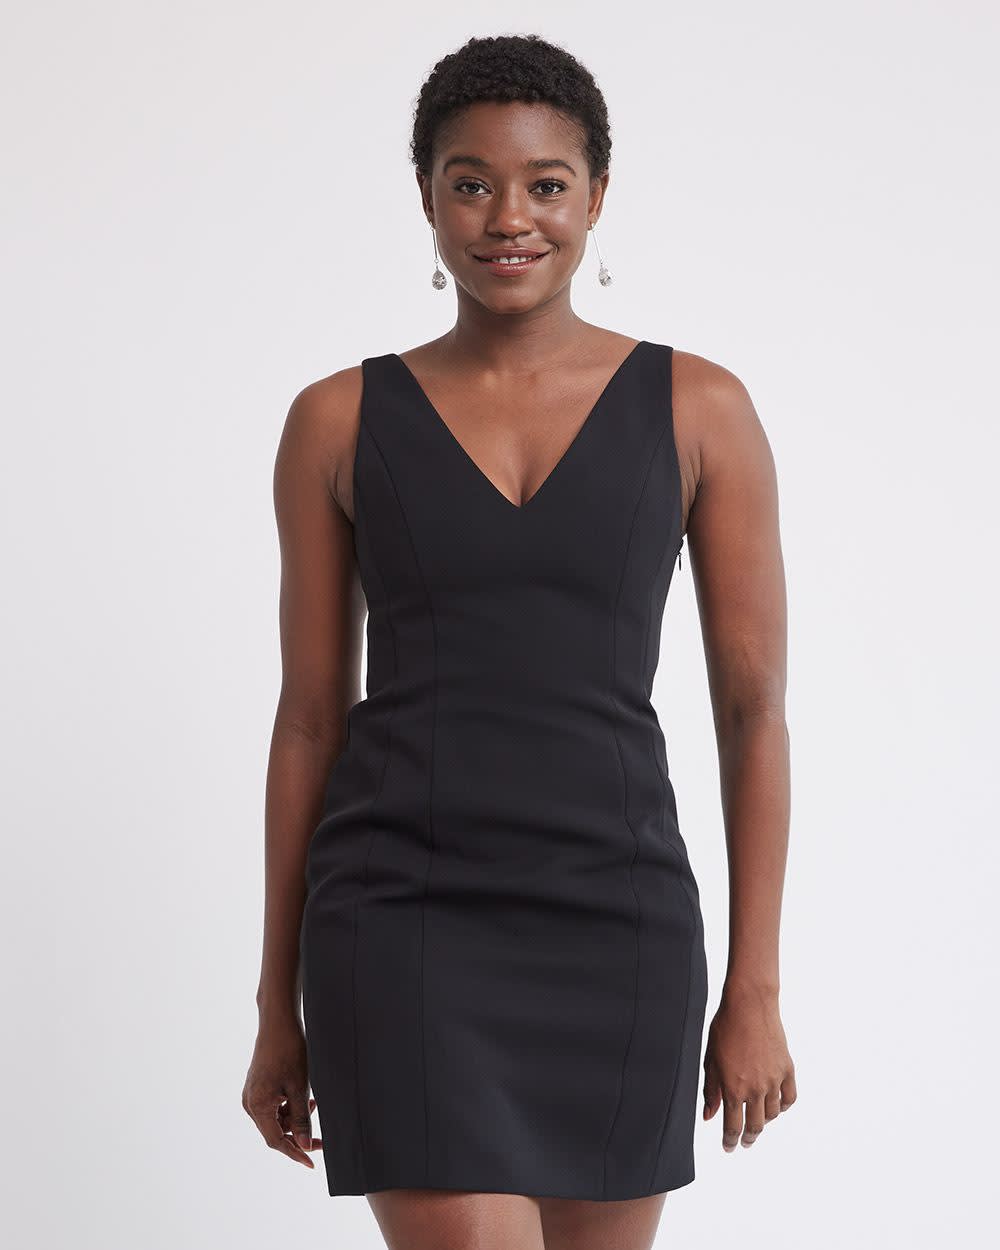 HDE Women's Travel Dress Sleeveless Summer Dress with Built-in Bra Black - L